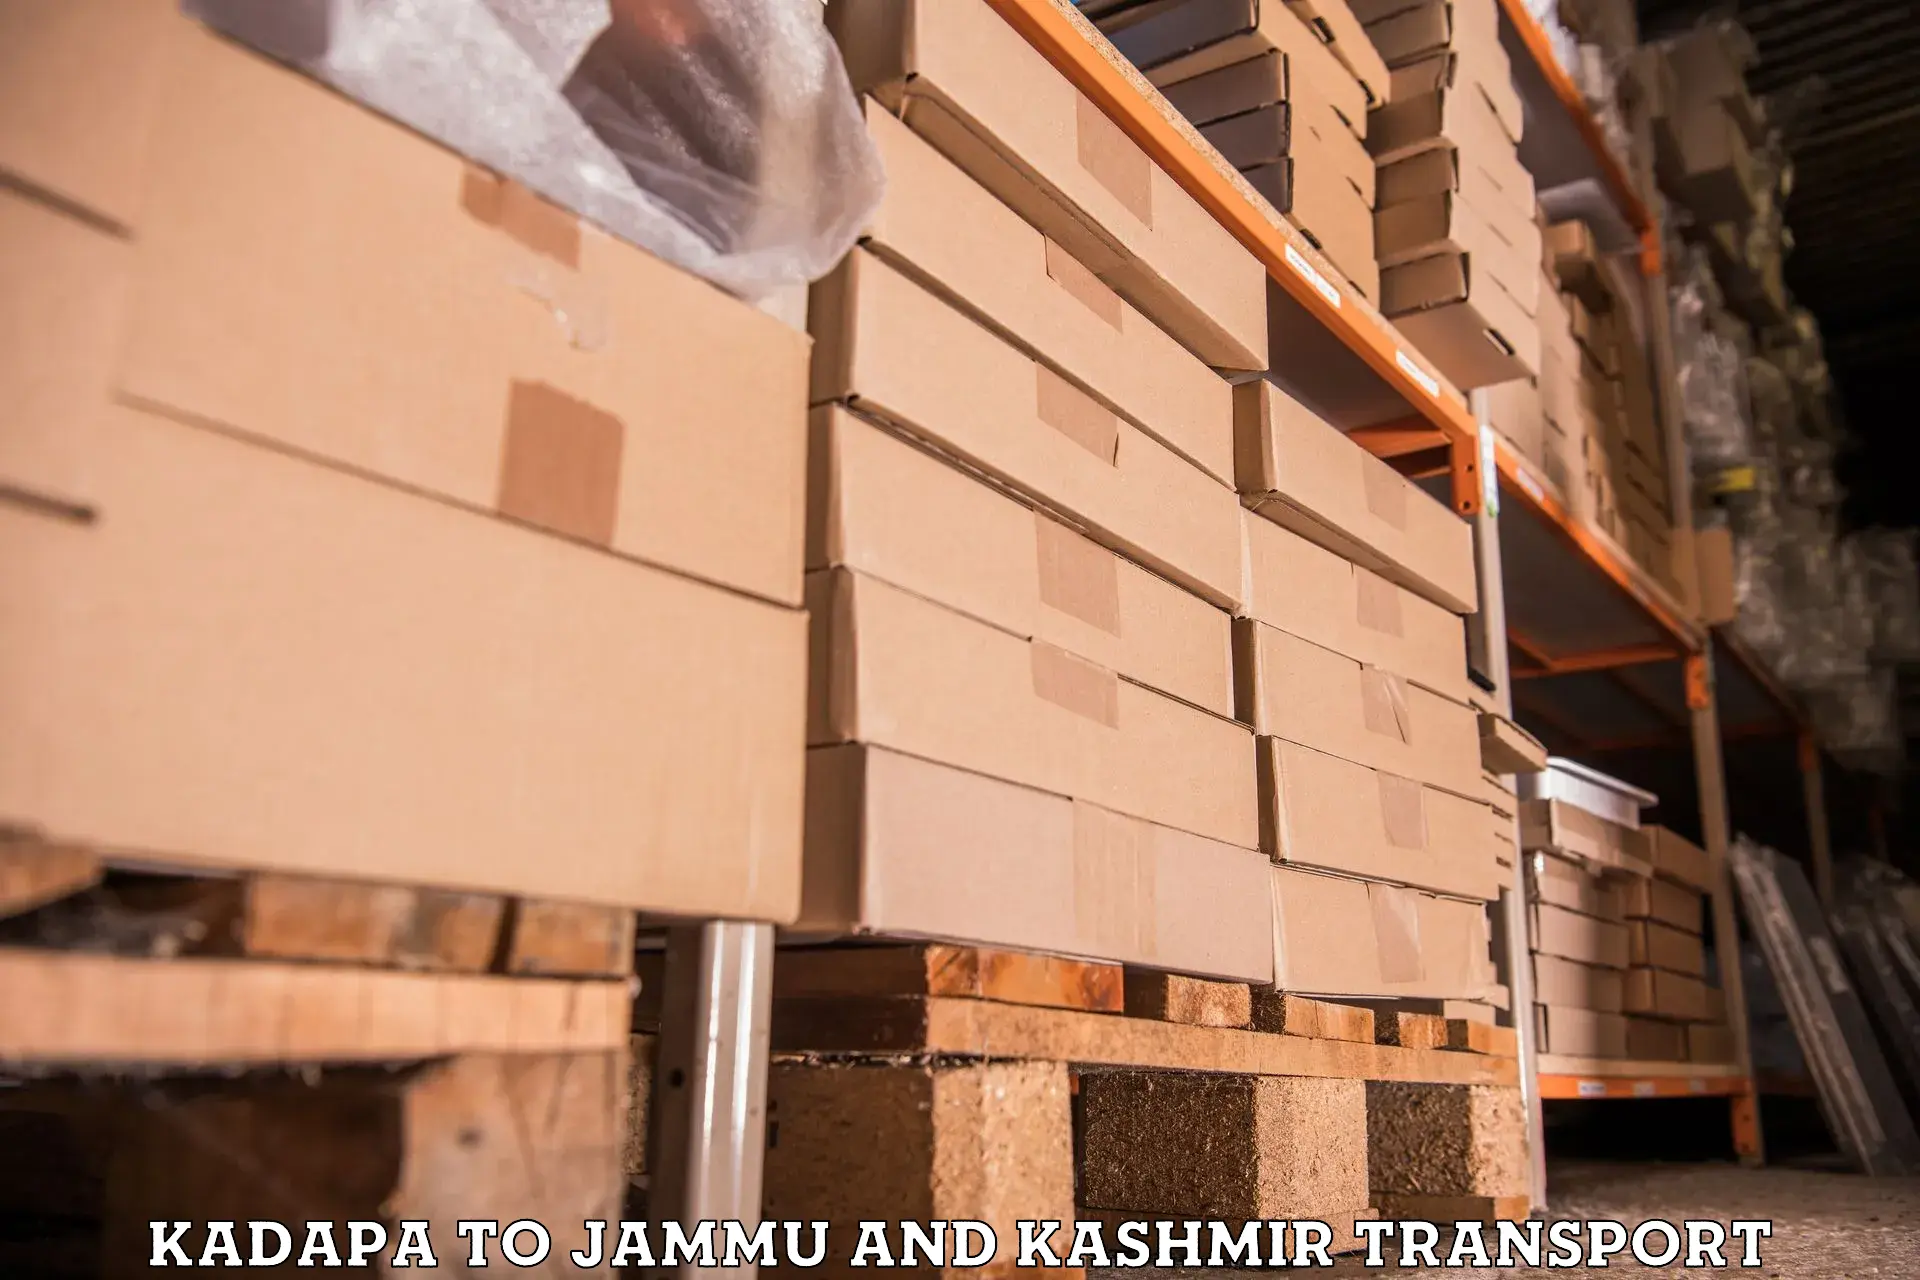 Shipping partner Kadapa to Bhaderwah